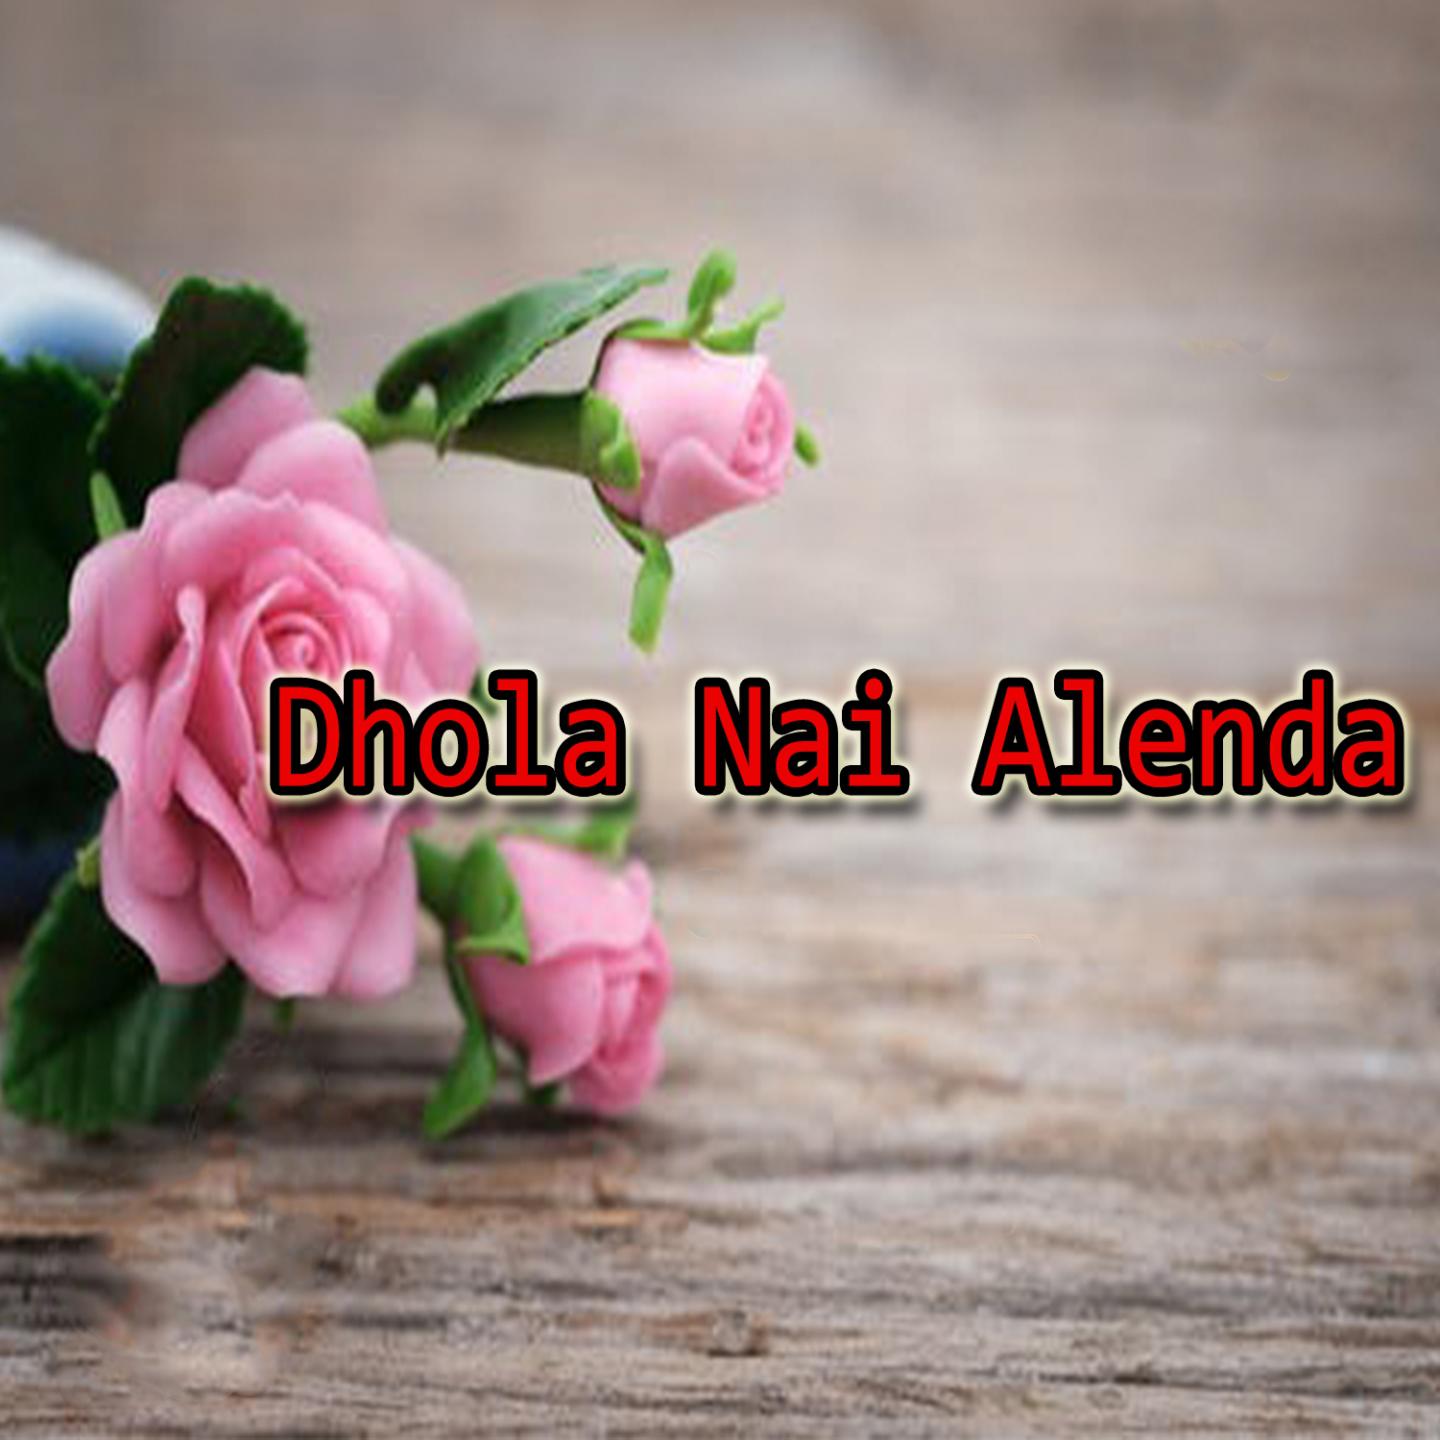 Dhola Nai Alenda